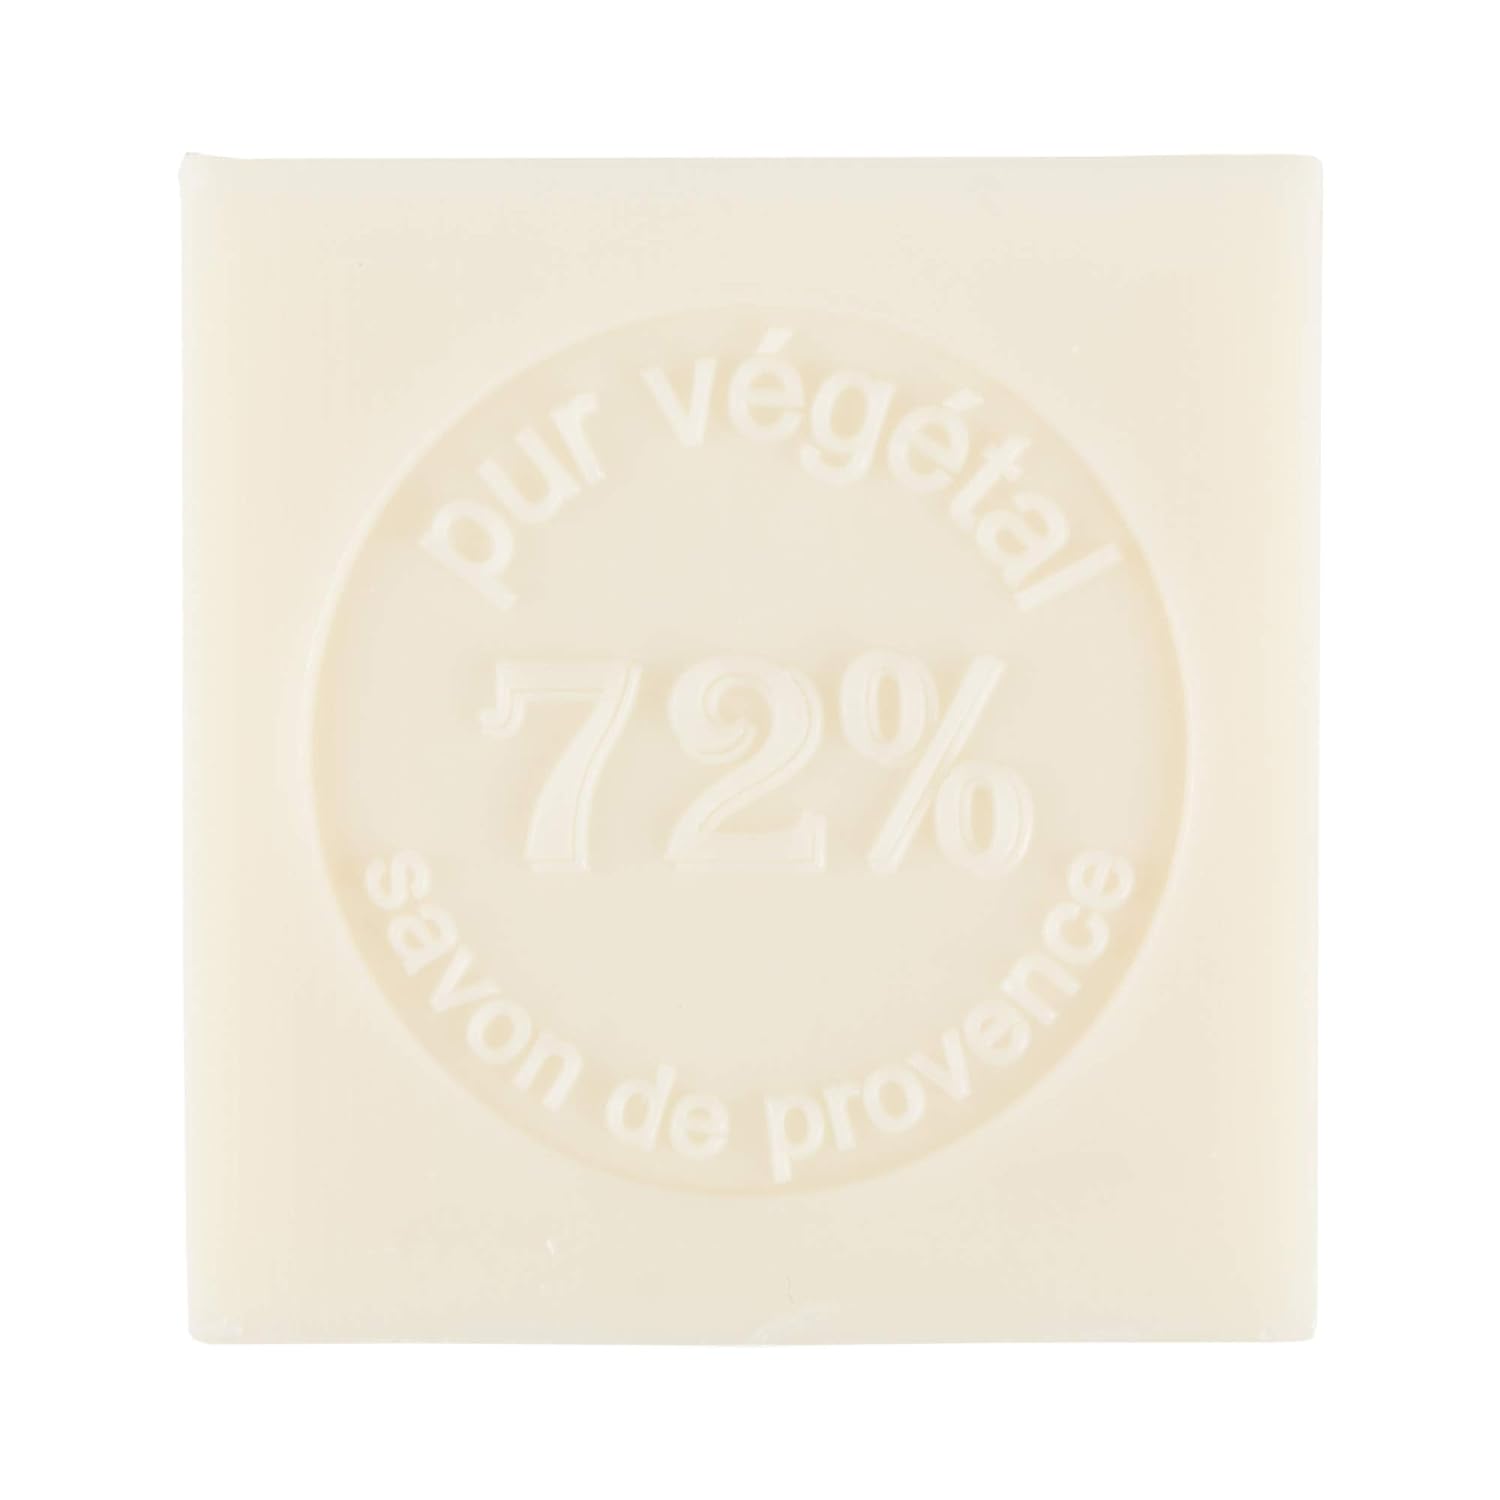 Pre de Provence Marseille Olive Oil Soap Cube – Clean Scent – 350g